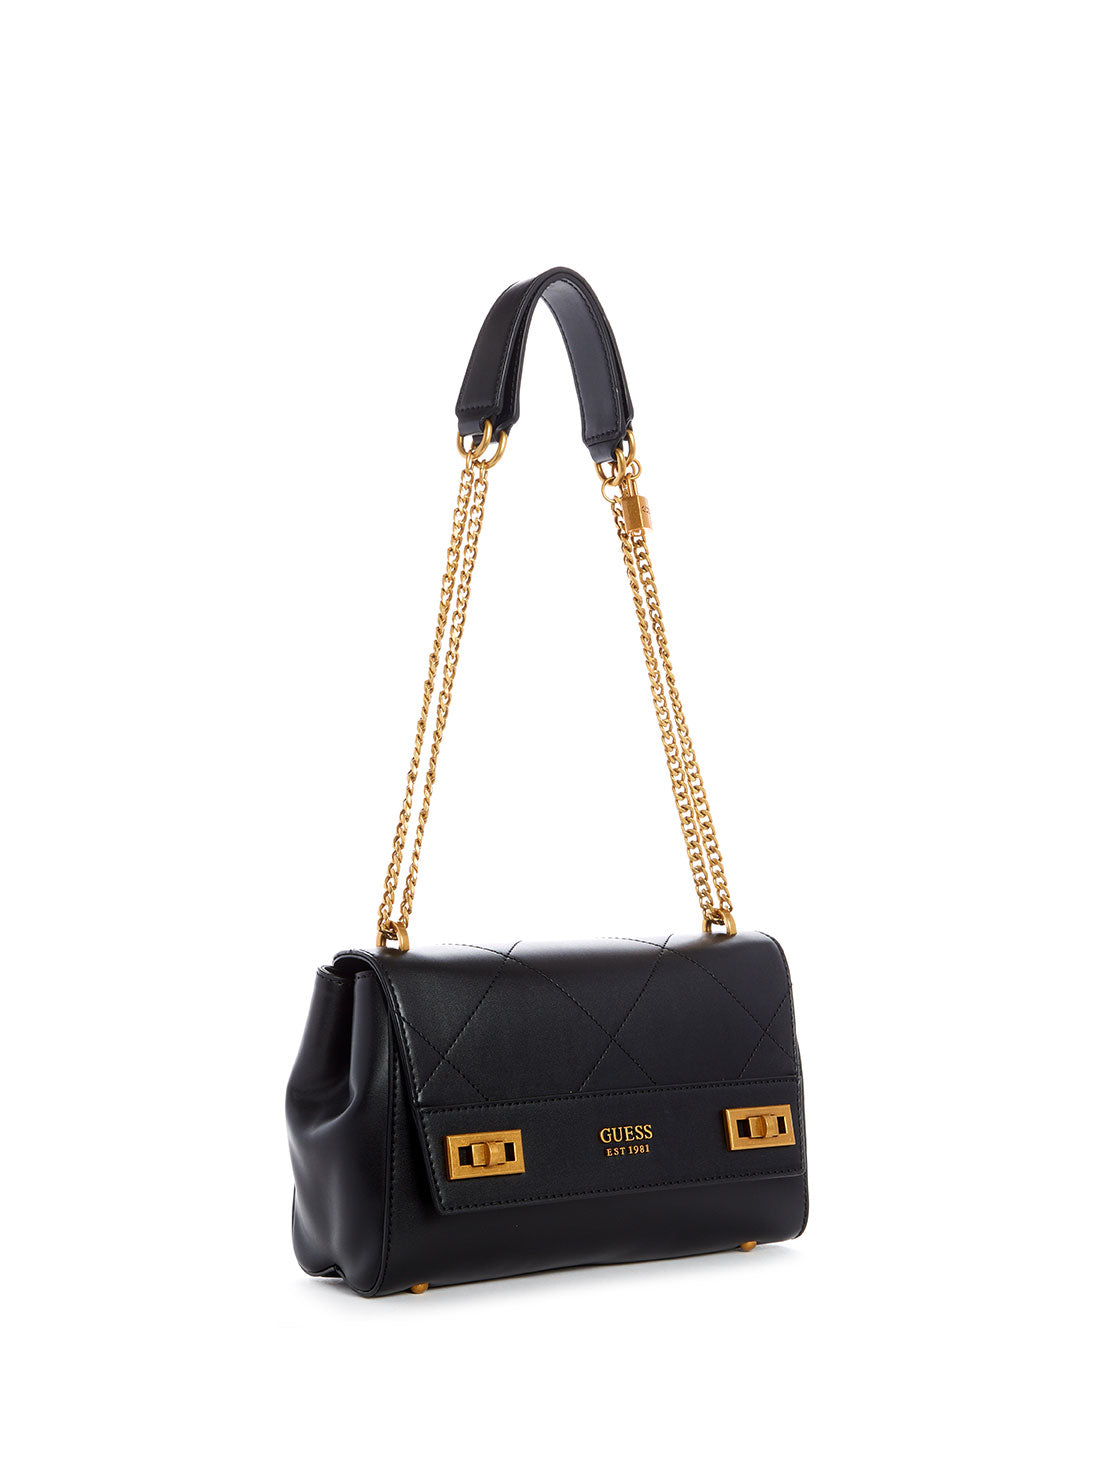 GUESS Women's Black Katey Shoulder Bag QA787019 Front Side View